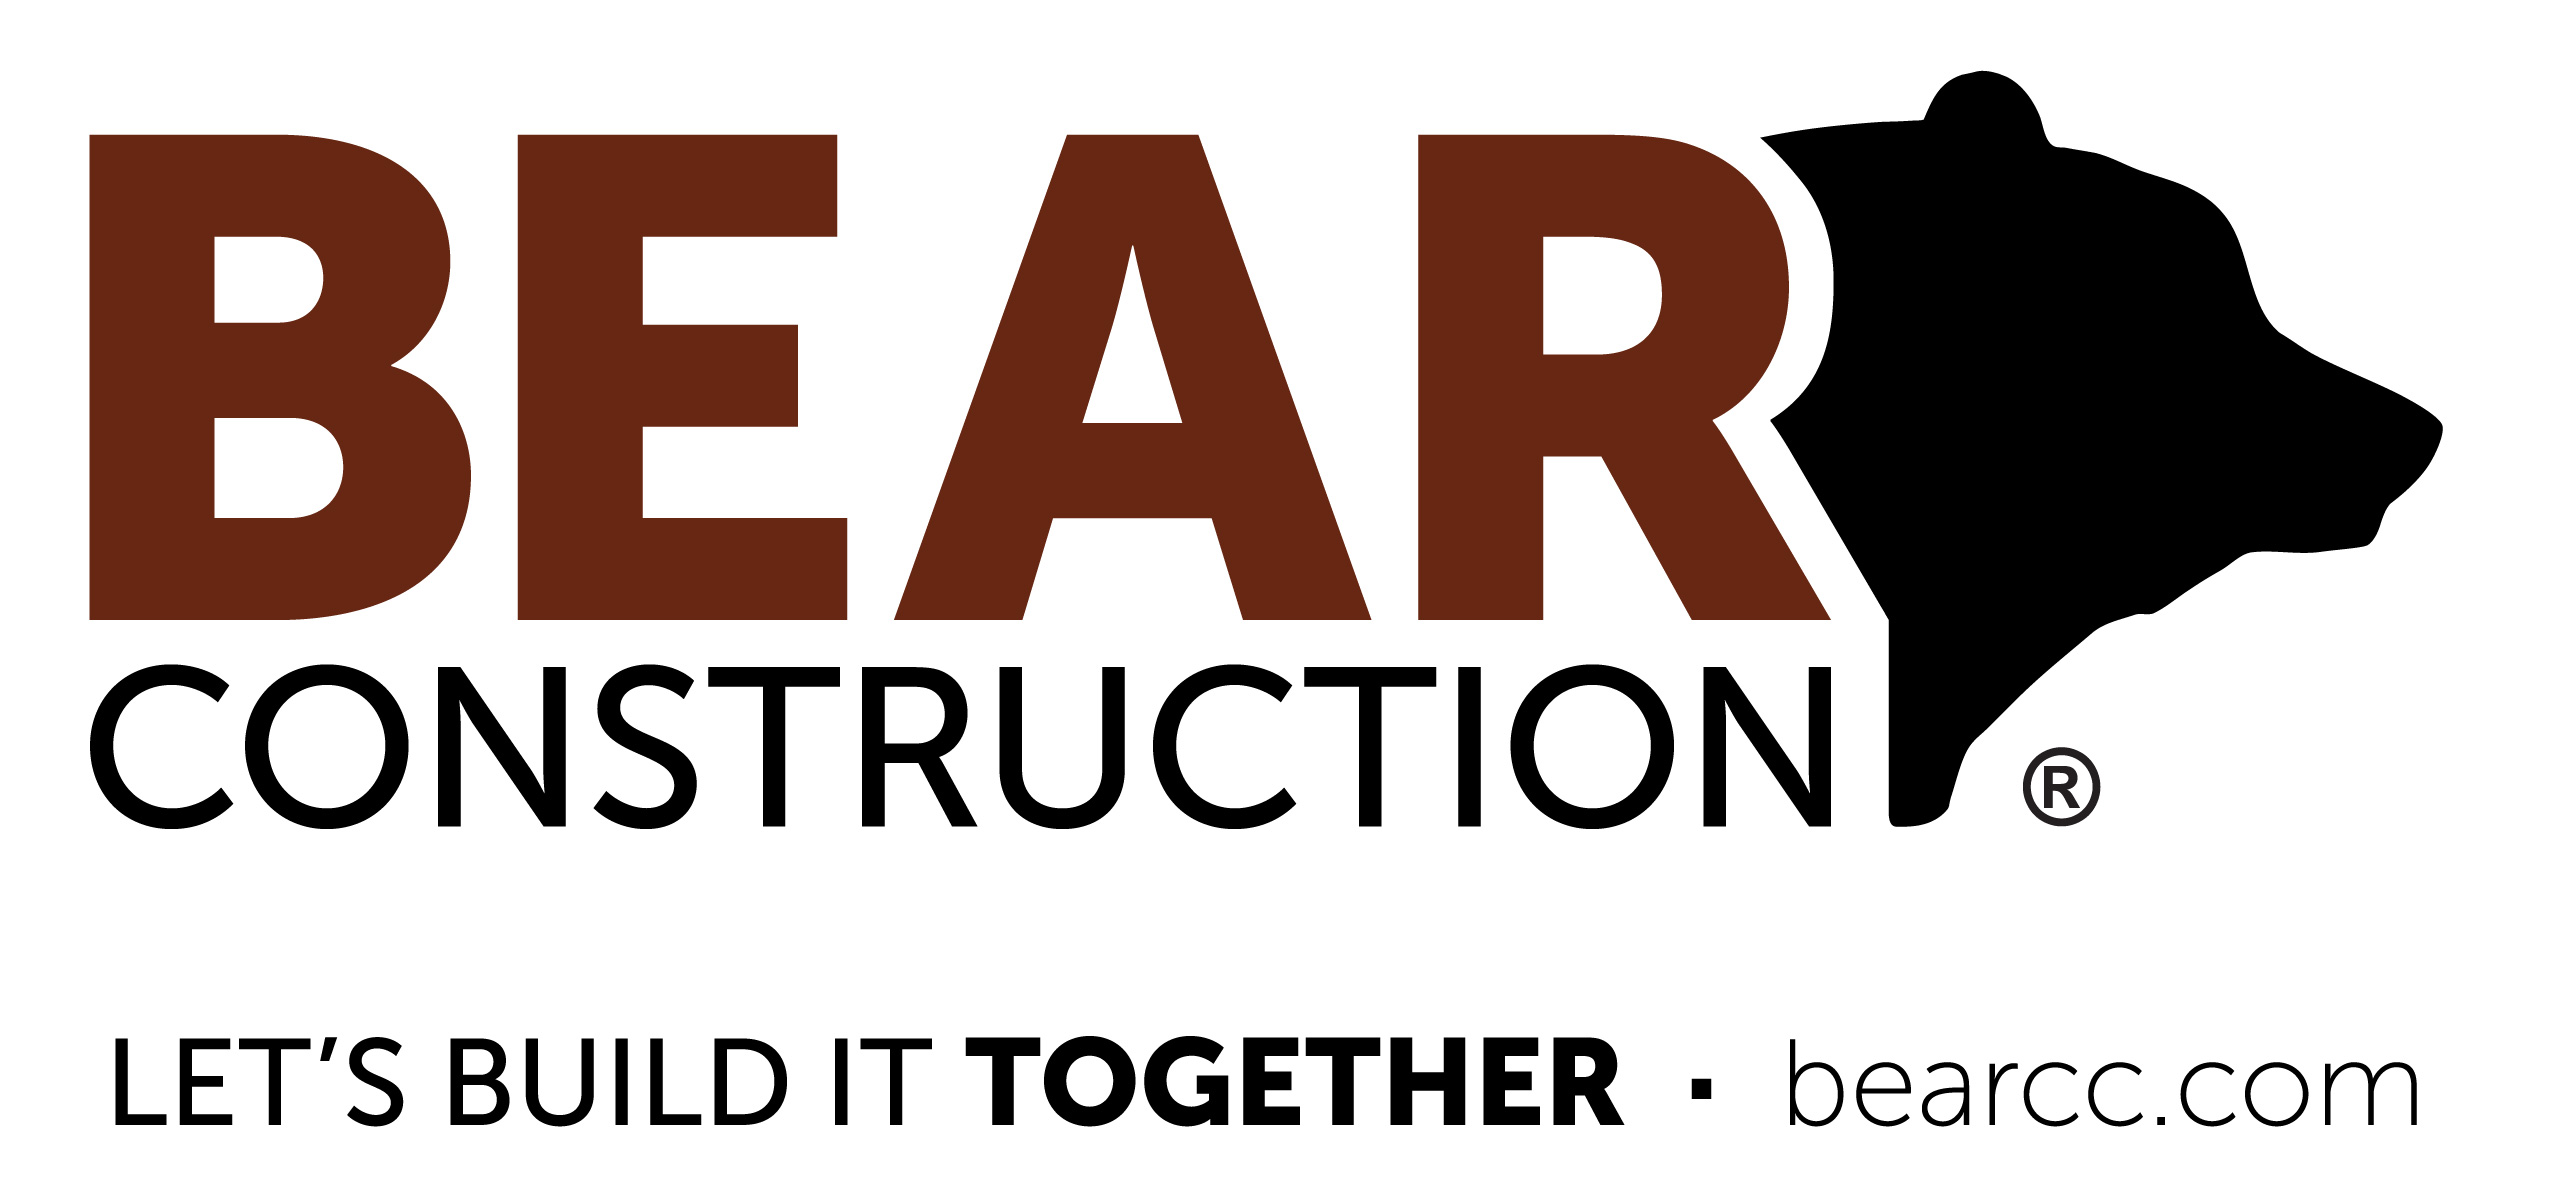 BEAR Construction